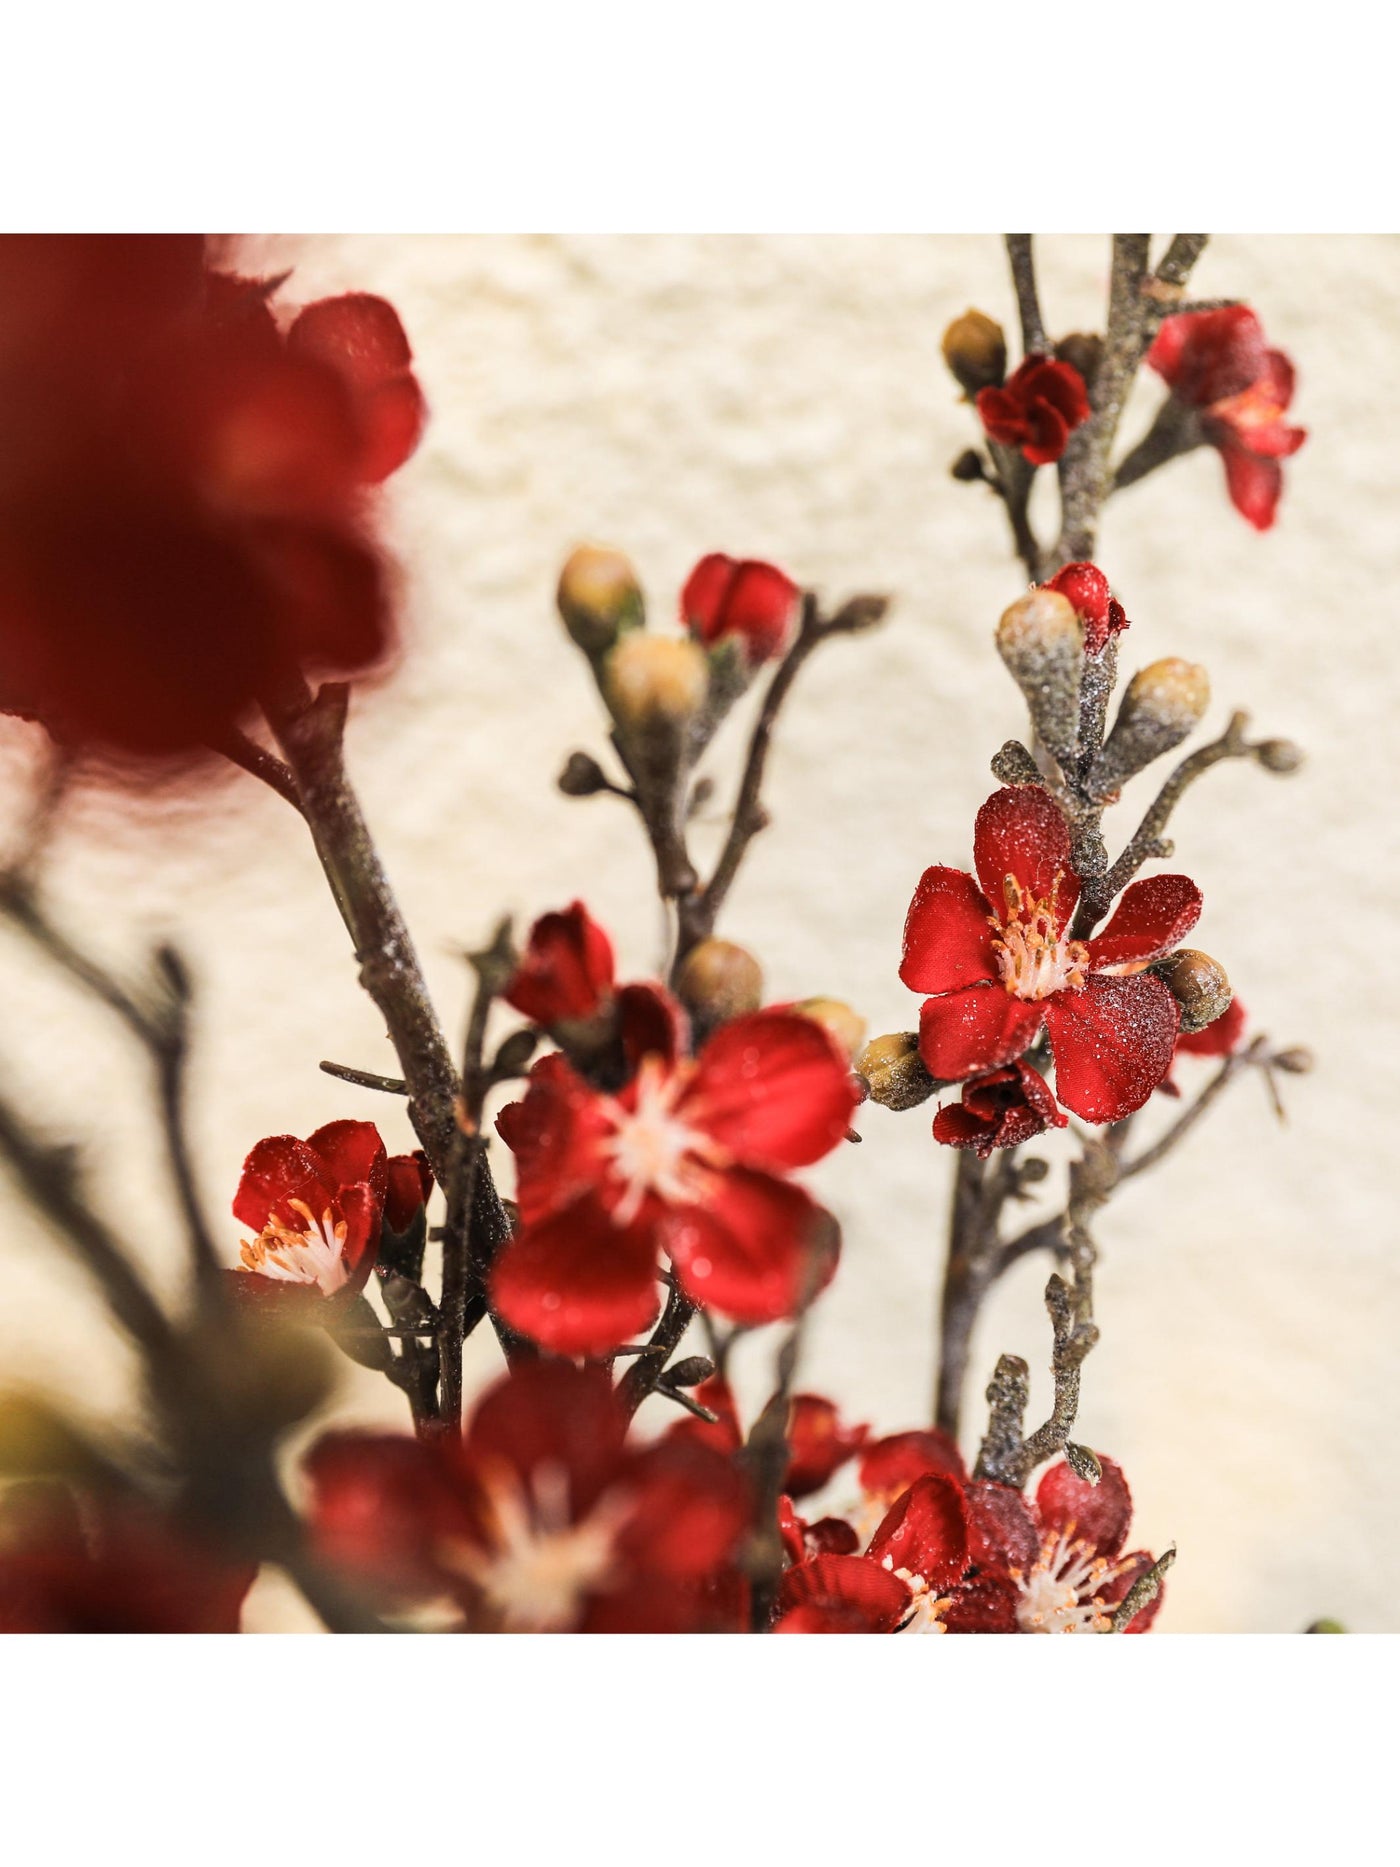 Artificial Flower Winter Cherry Blossom Red